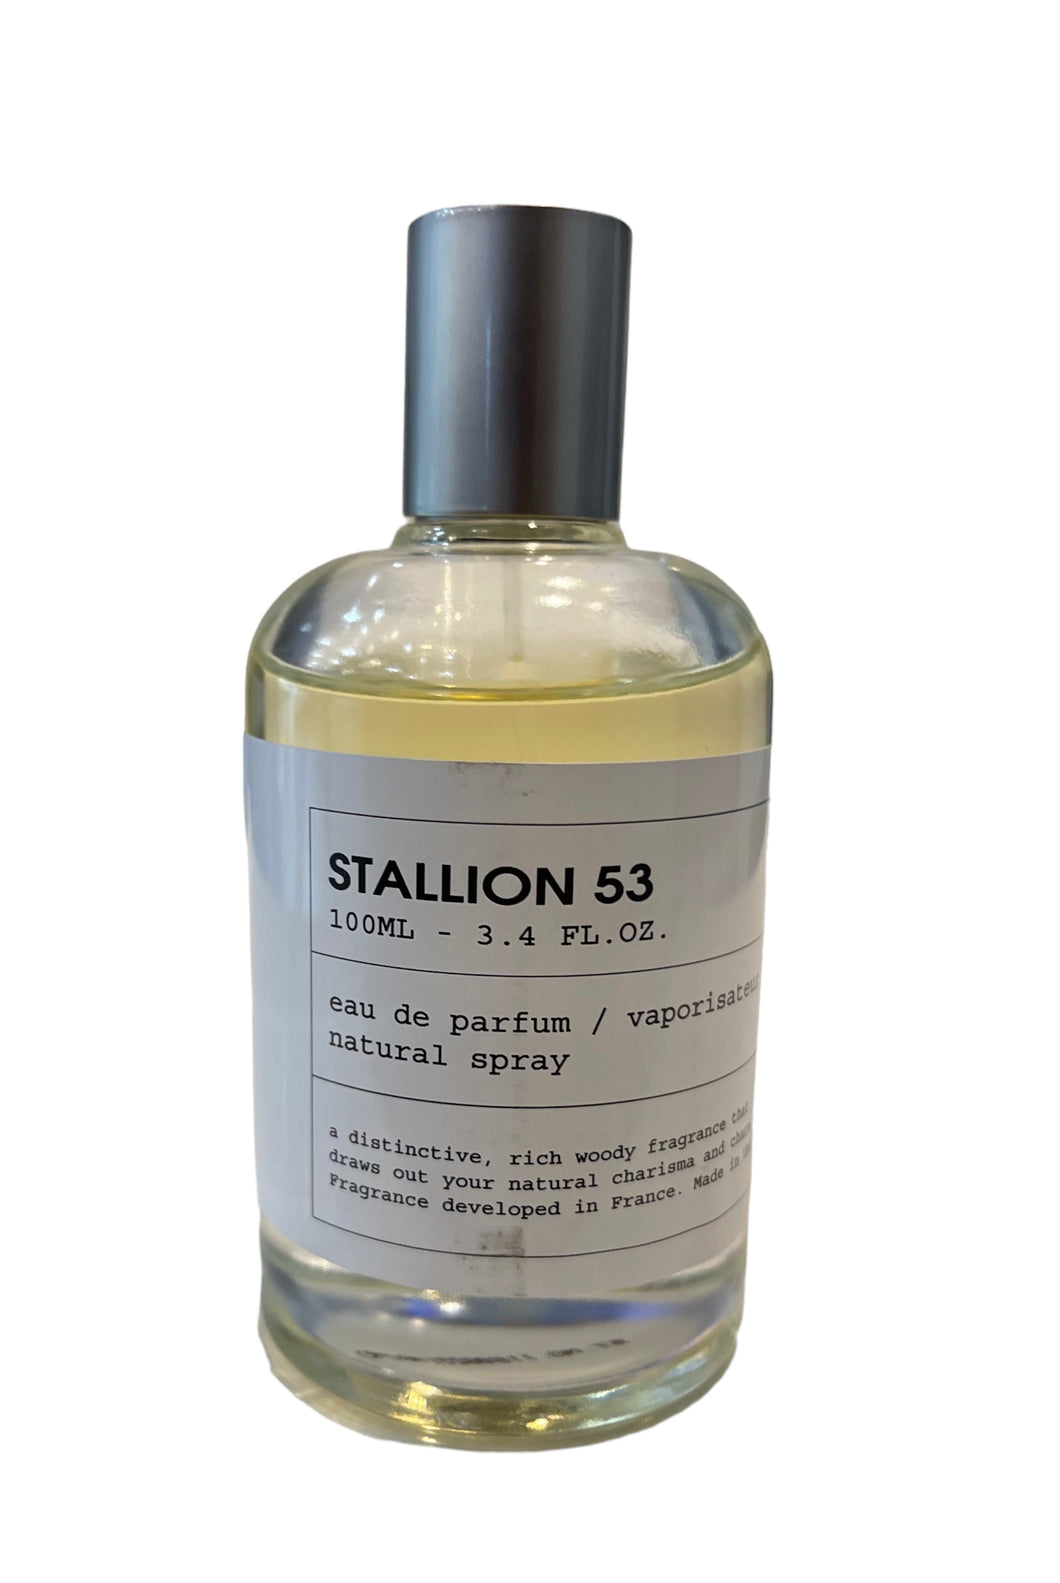 stallion 53 by emper eau de parfum 3.4oz unixes inspired by santal 33 - alwaysspecialgifts.com